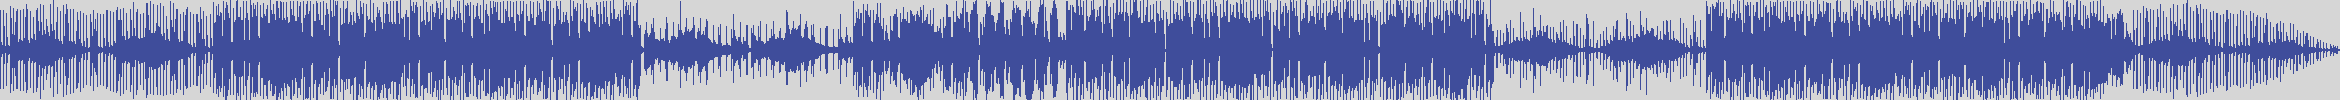 noclouds_chillout [NOC109] Patrik Samuelson - Chaos and Calm [Double Identity Mix] audio wave form